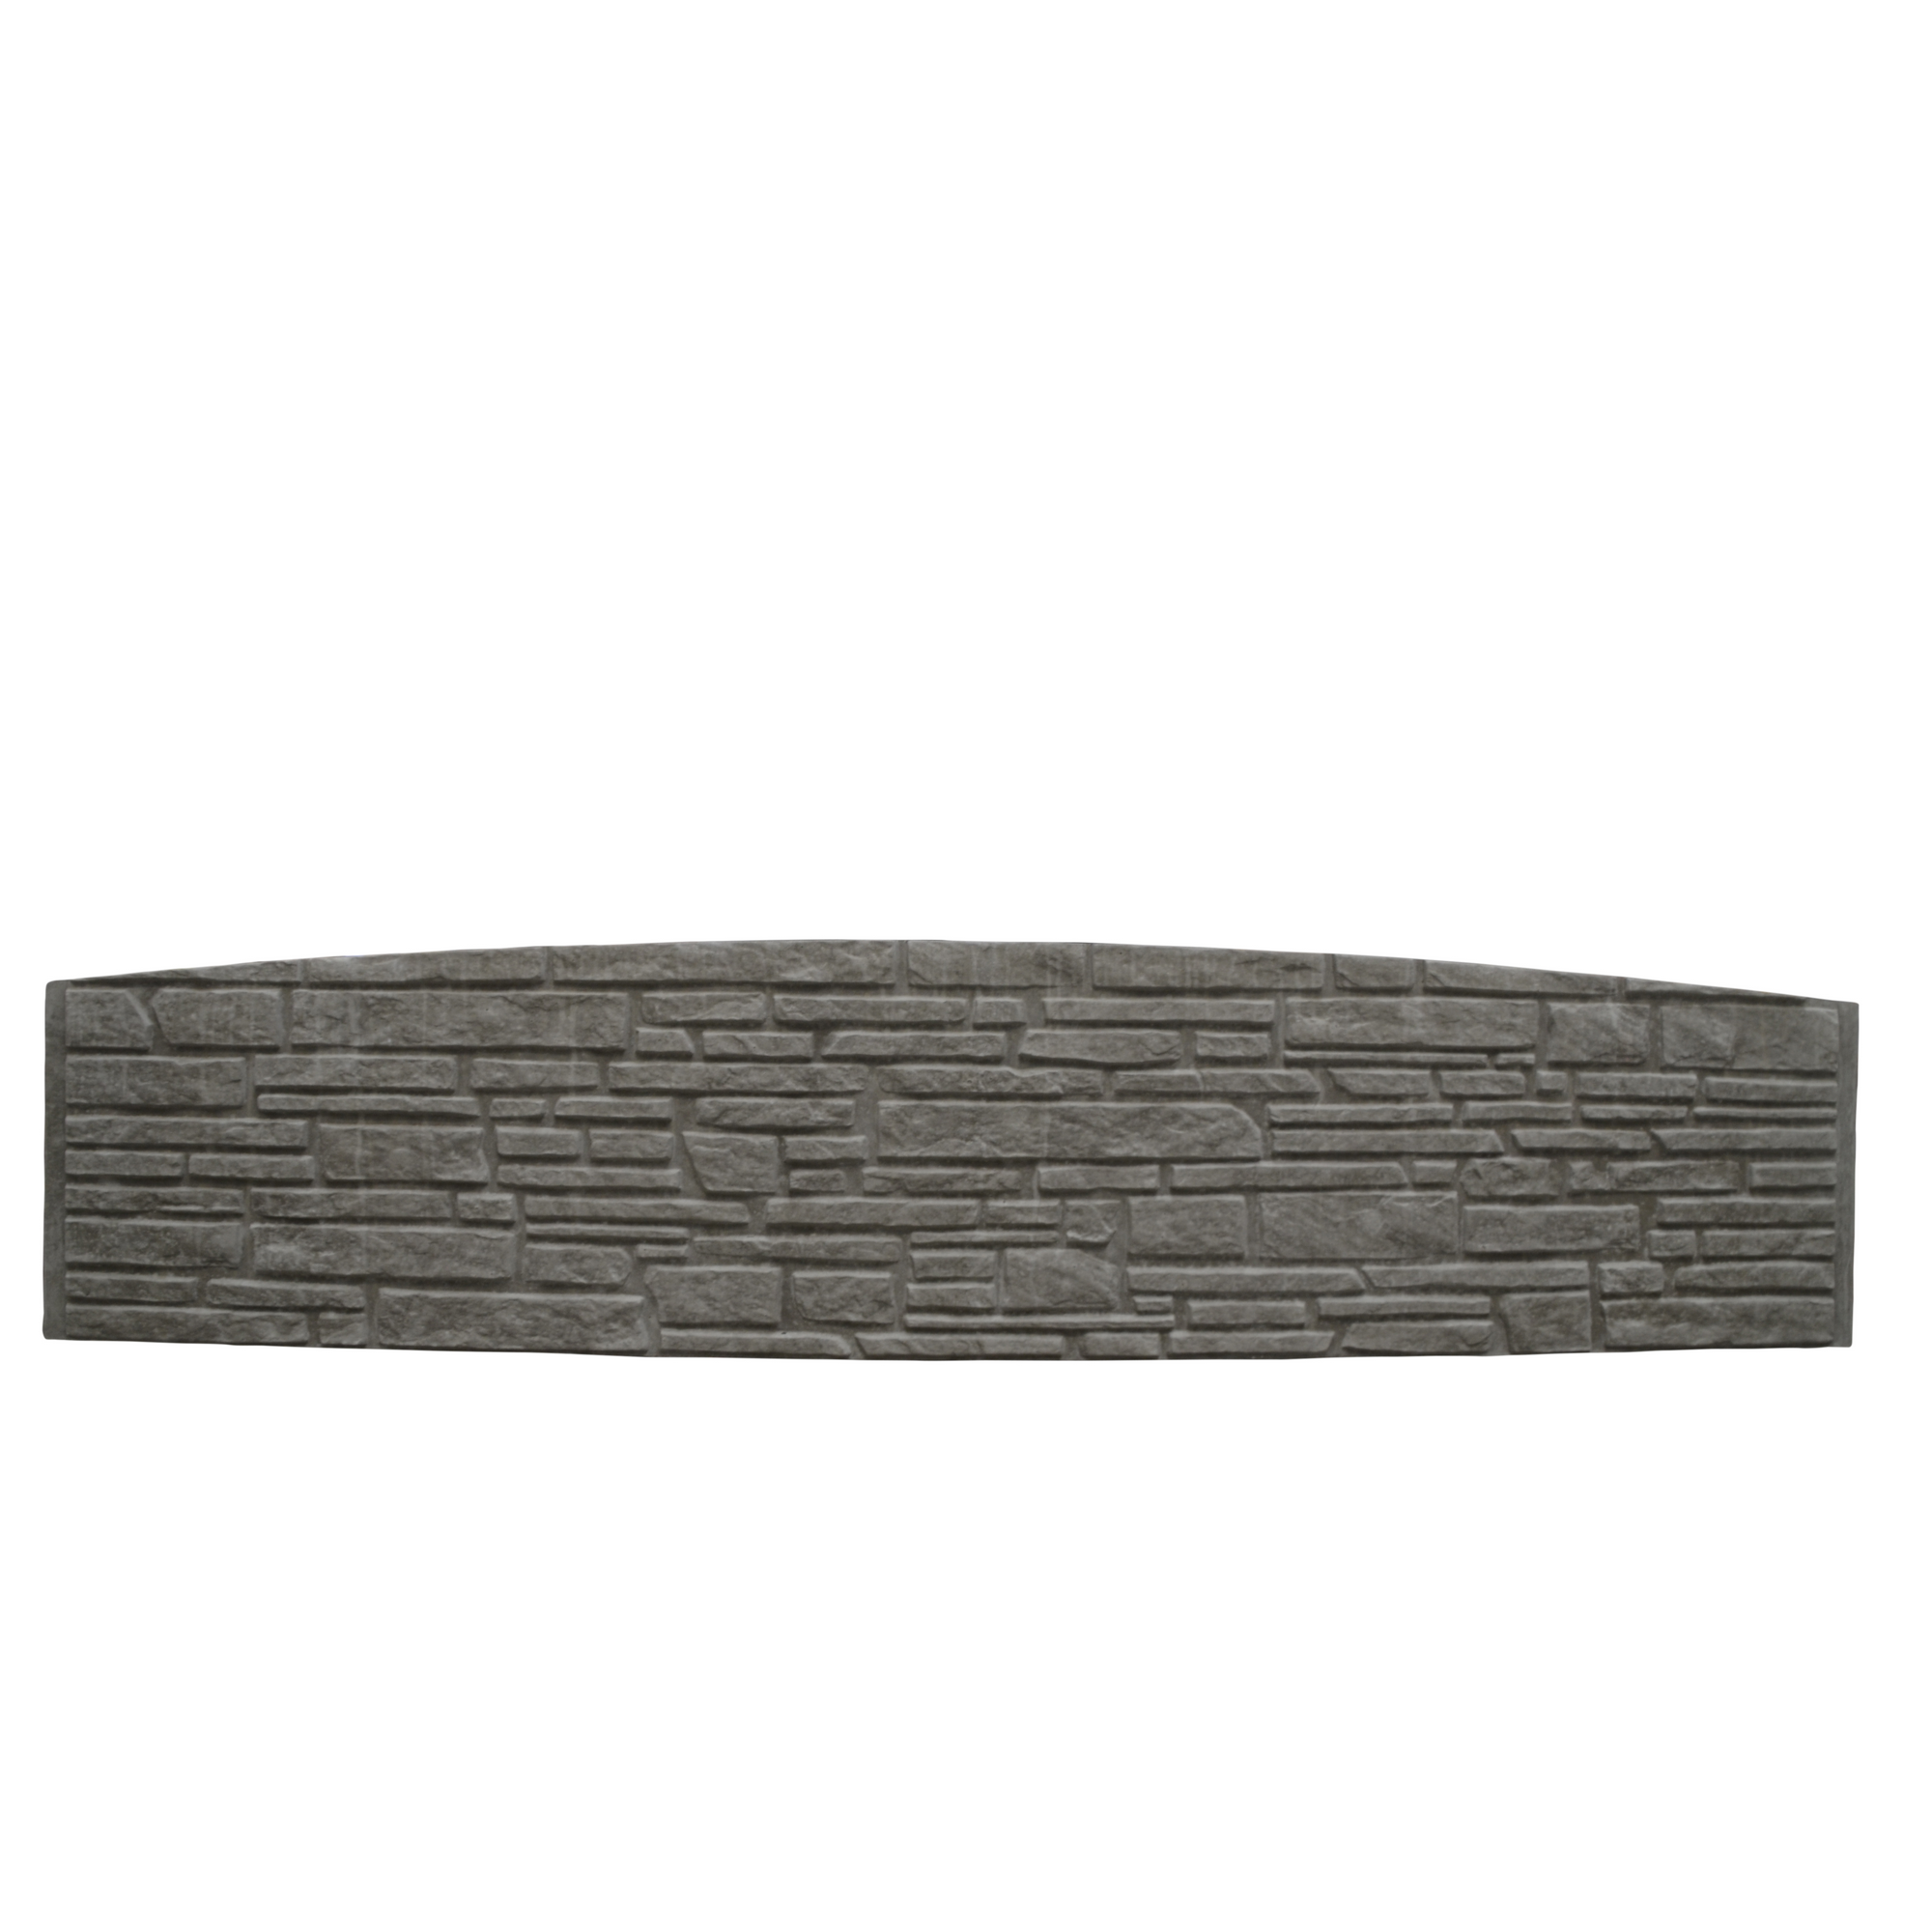 Betonzaunbogenplatte 'Standard Montana' Beton/Stahl grau 200 x 45 x 3,5 cm + product picture